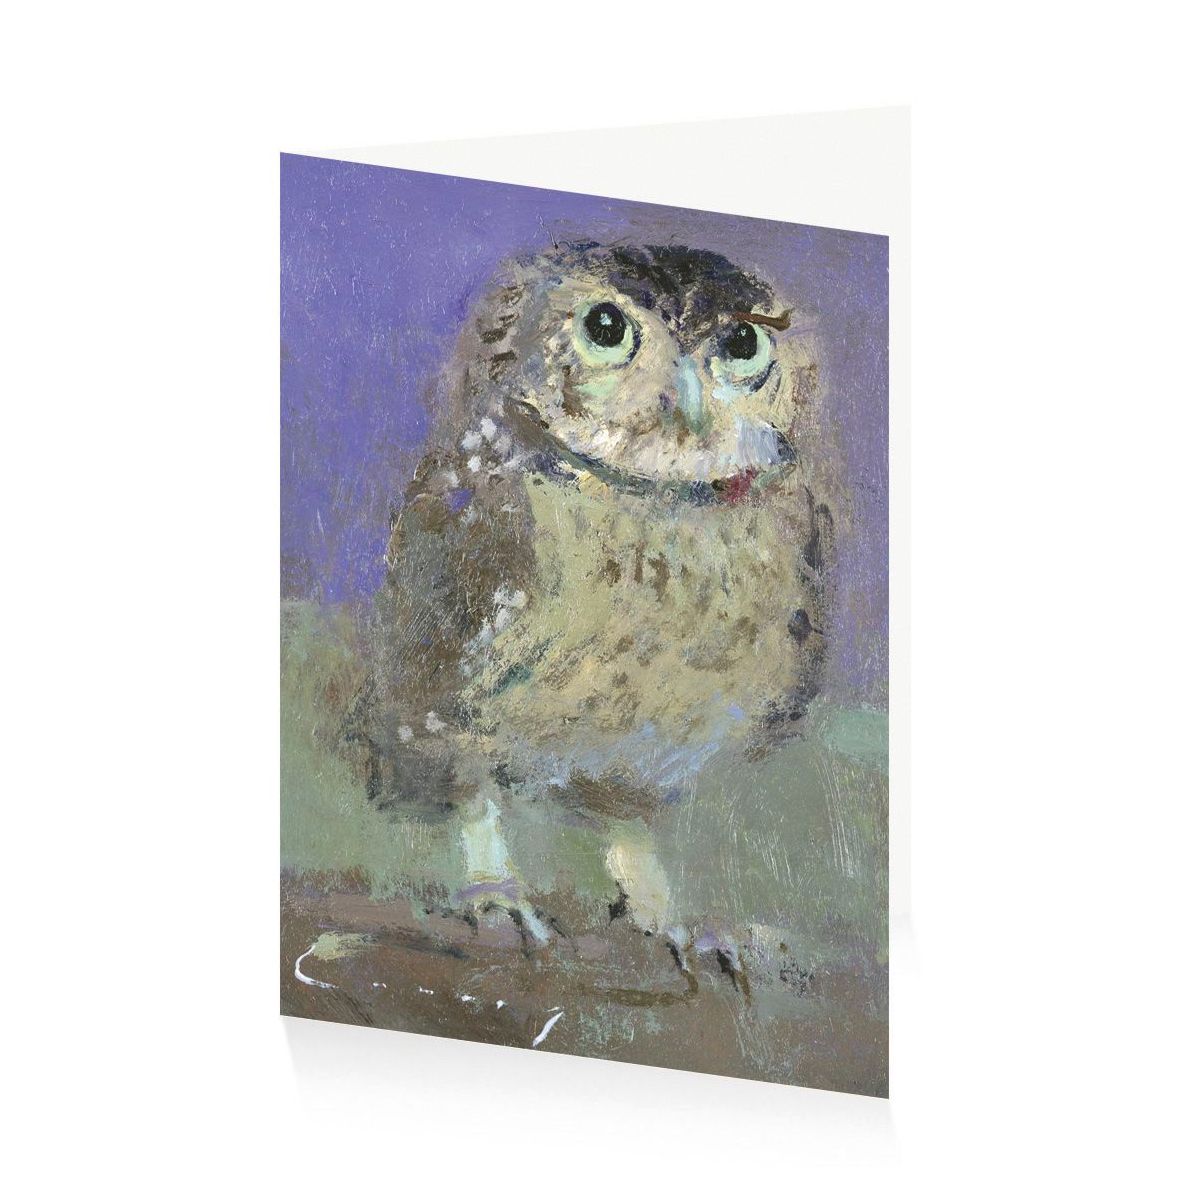 Royal Academy | Fred Cuming - 'Little Owl' - Art Greetings Card (17 x 12 cm)